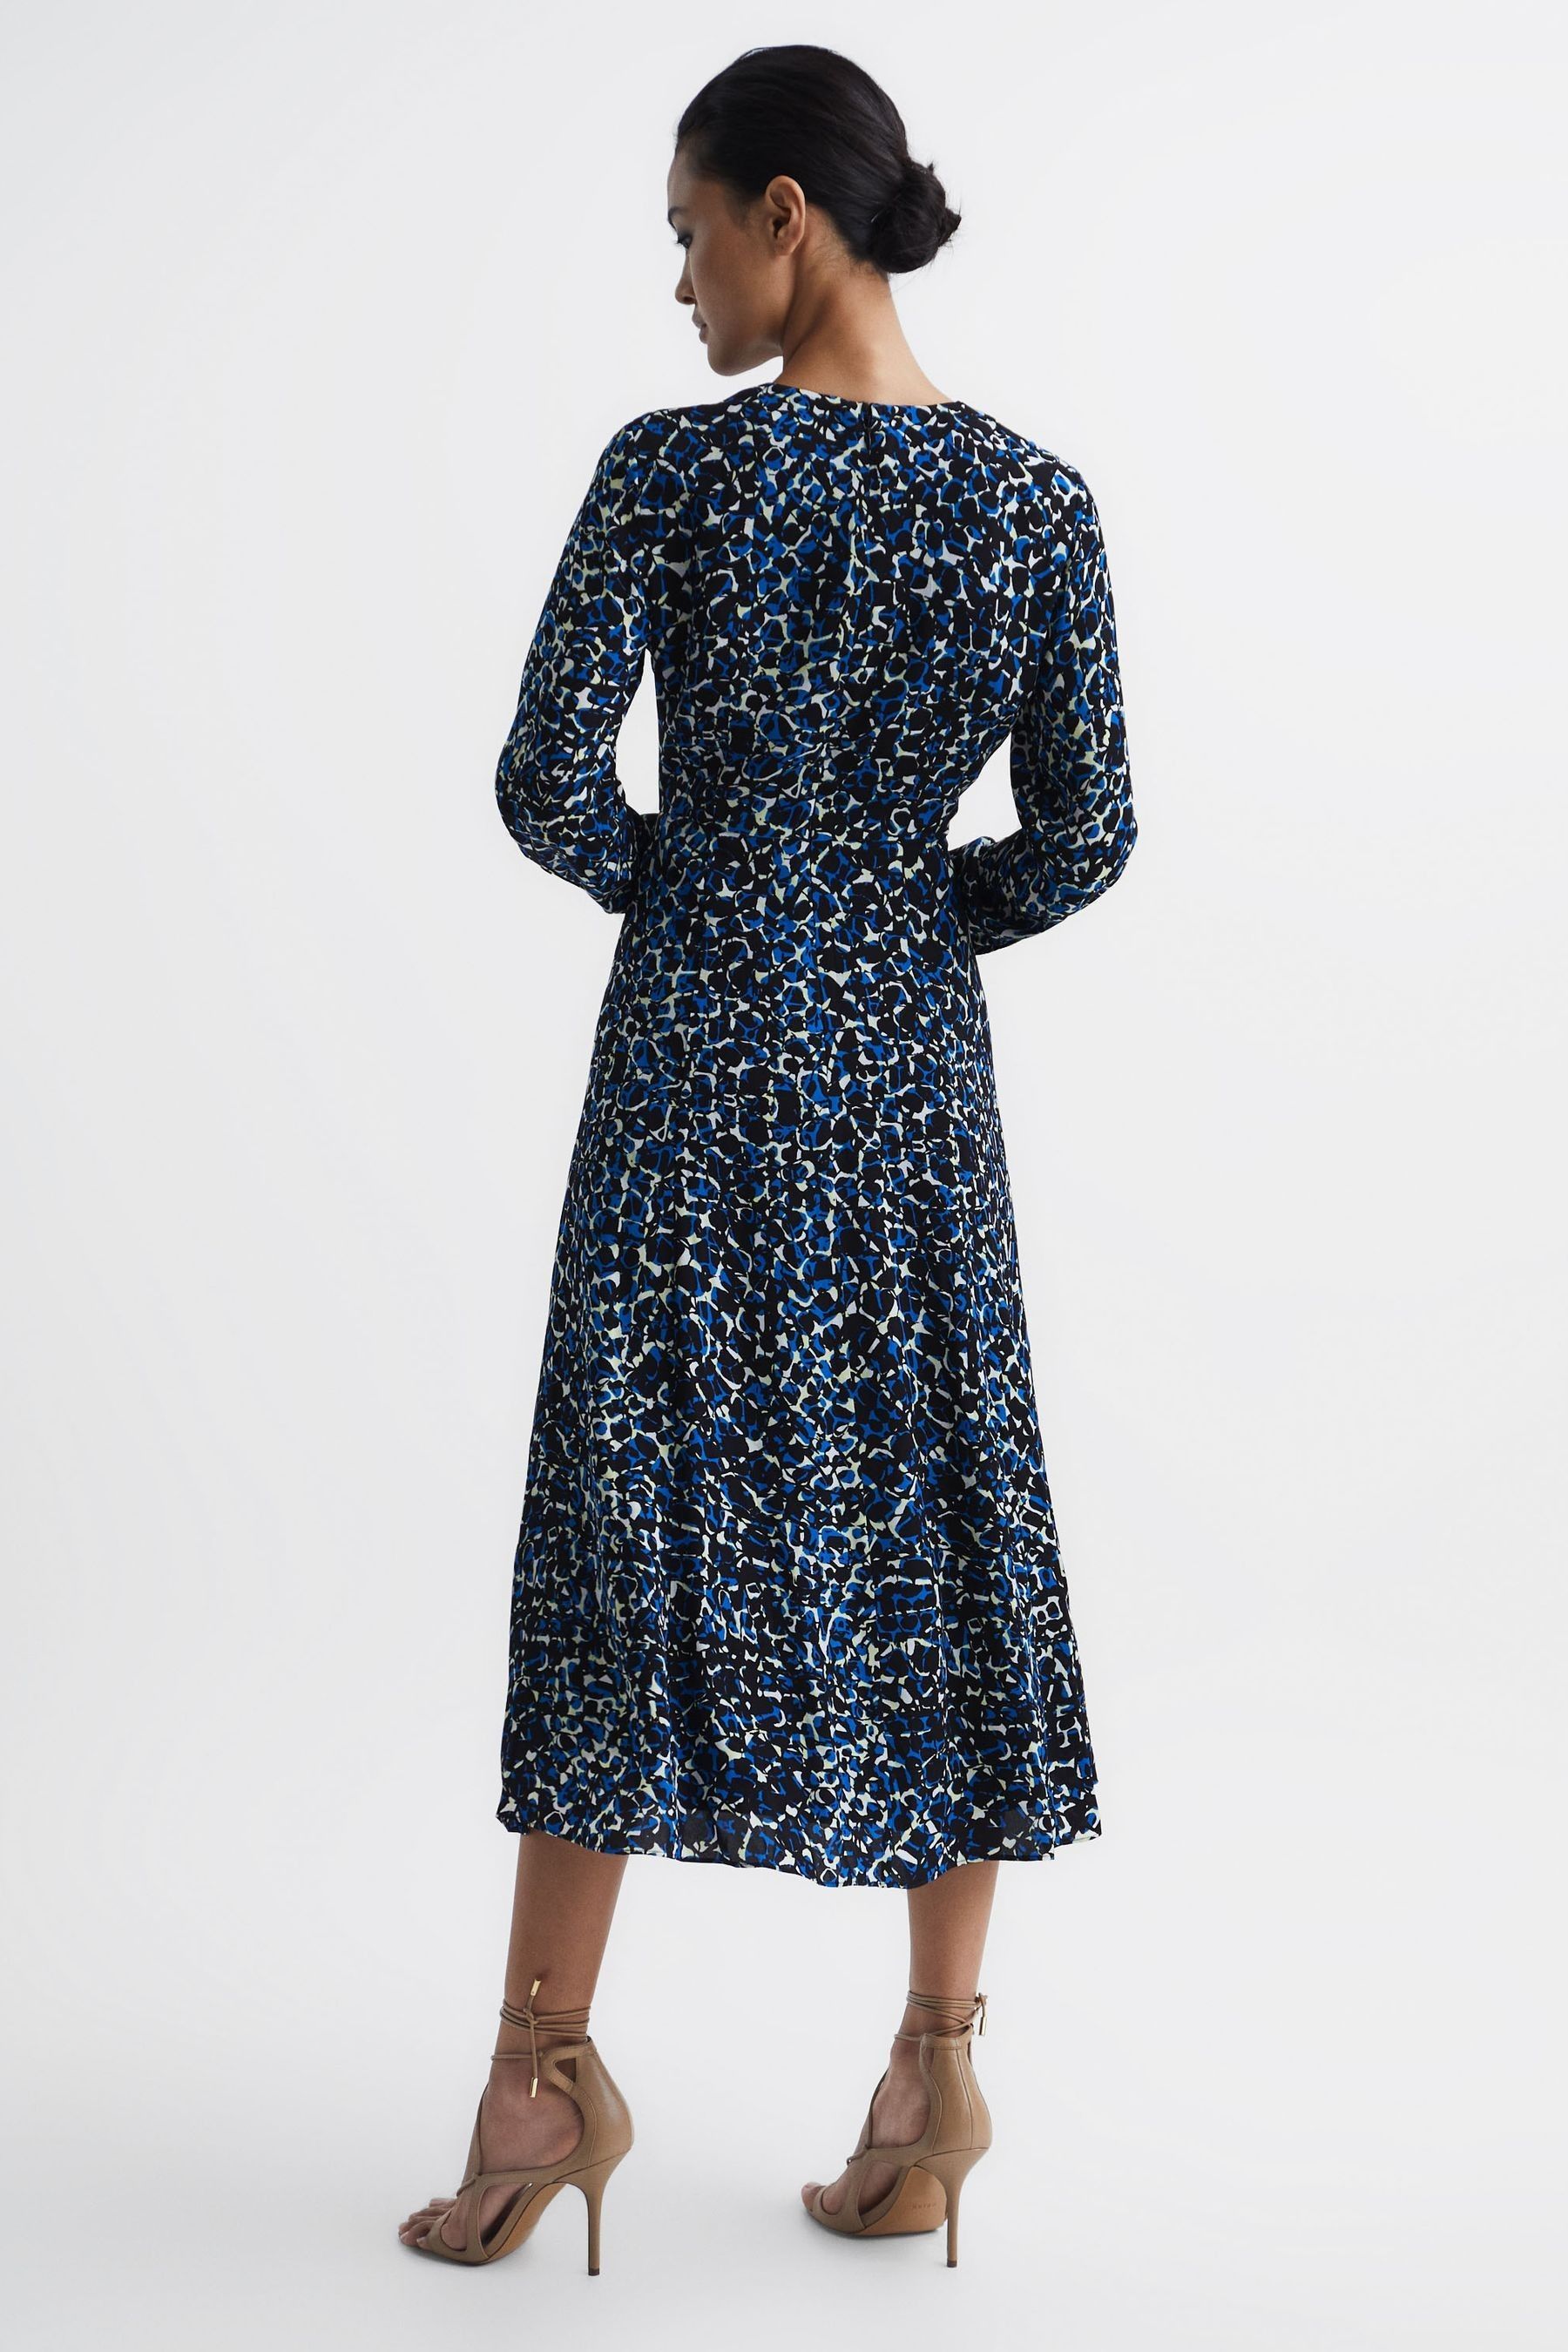 Buy Reiss Greta Long Sleeve Printed Midi Dress from Next Ireland